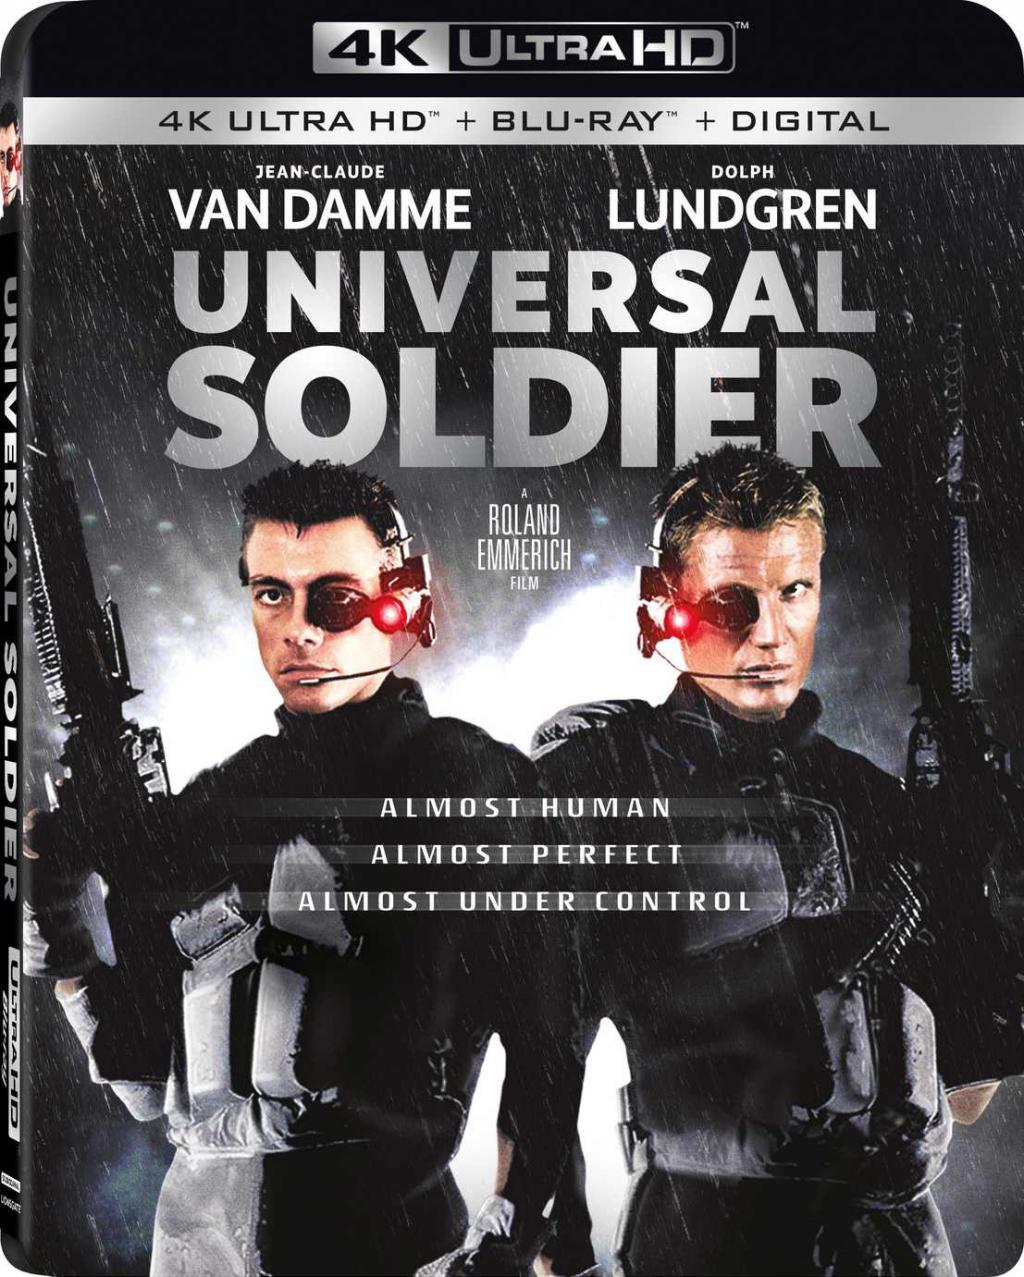 Universal_Soldier_hits_4K_Blu-ray_next_month.jpg